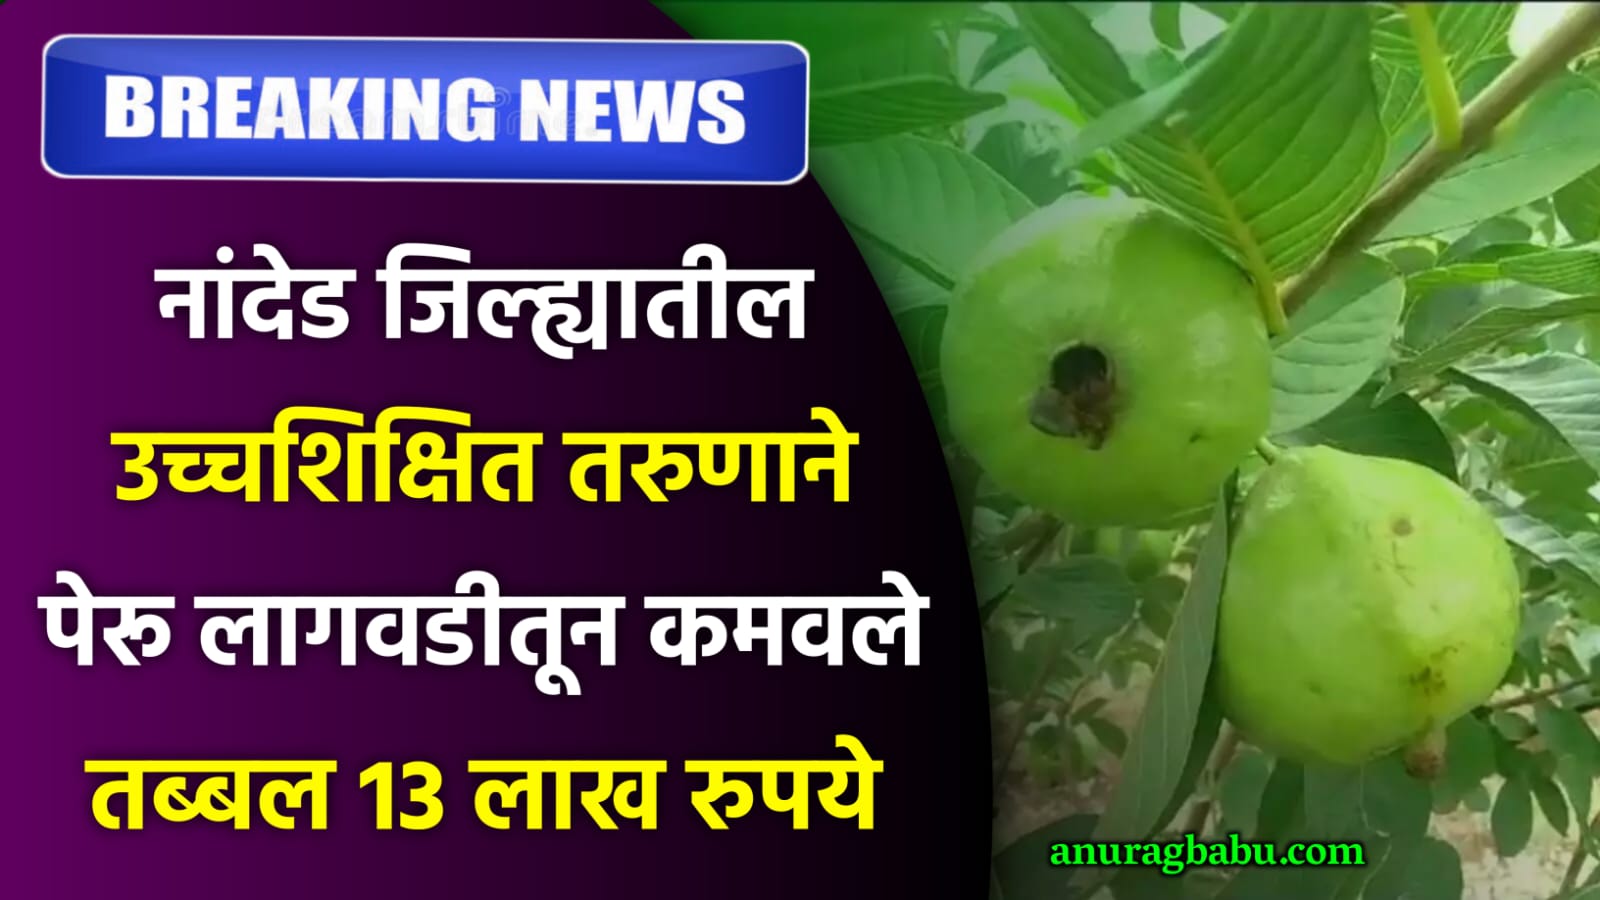 Successful cultivation of guava